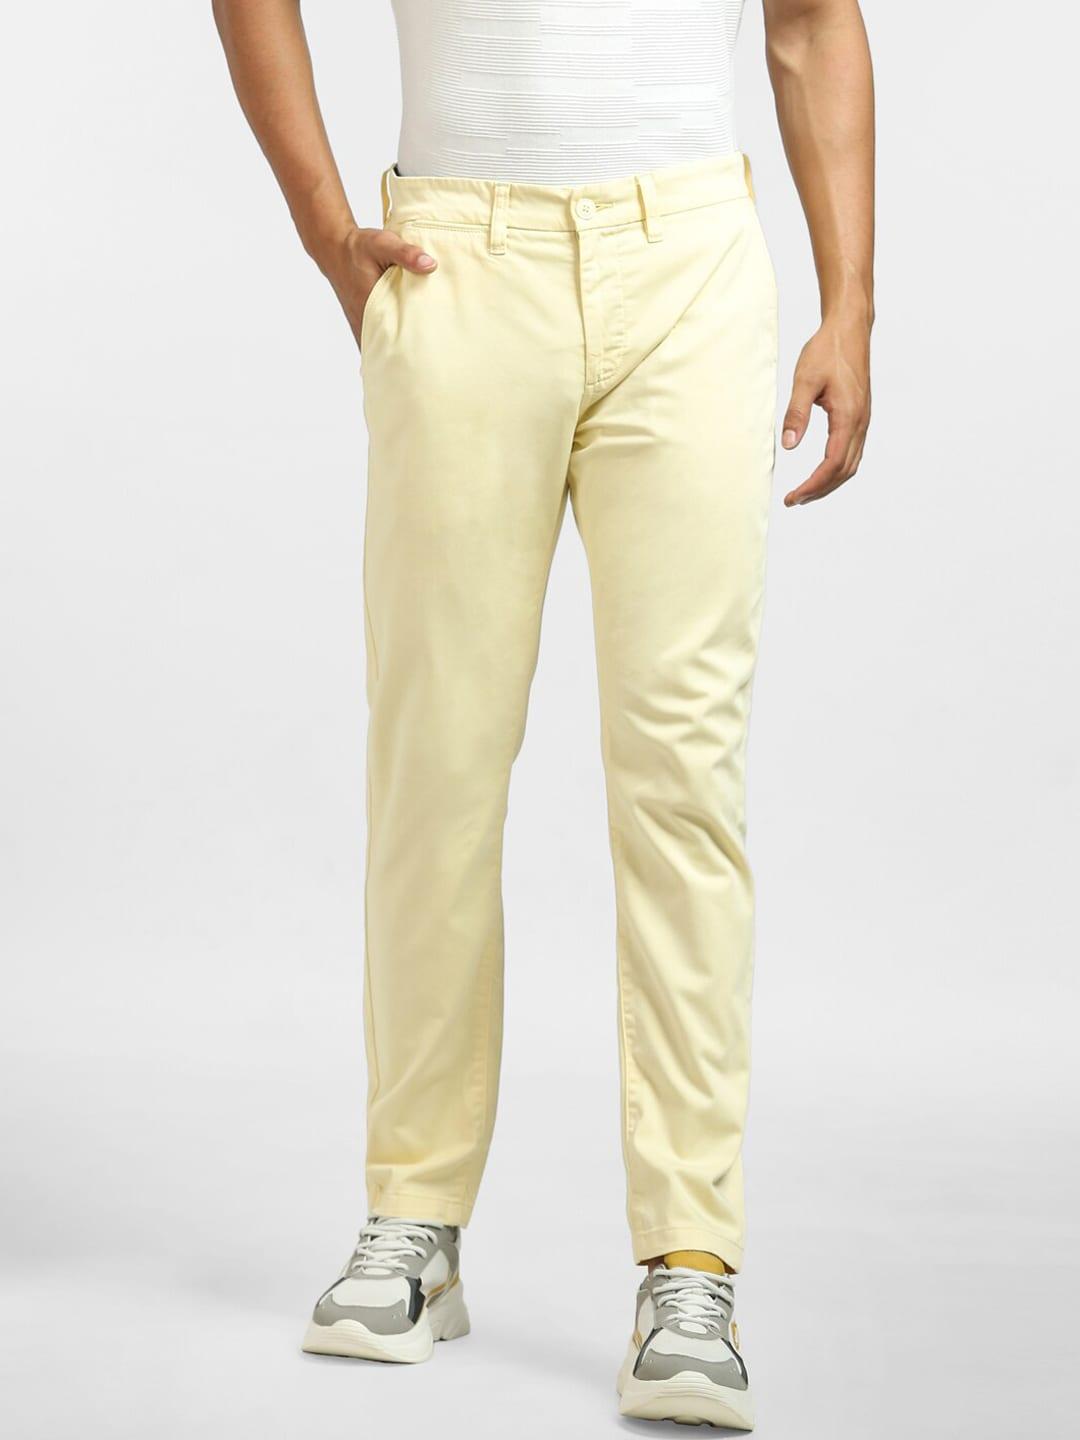 jack-&-jones-men-yellow-low-rise-cotton-chinos-trousers